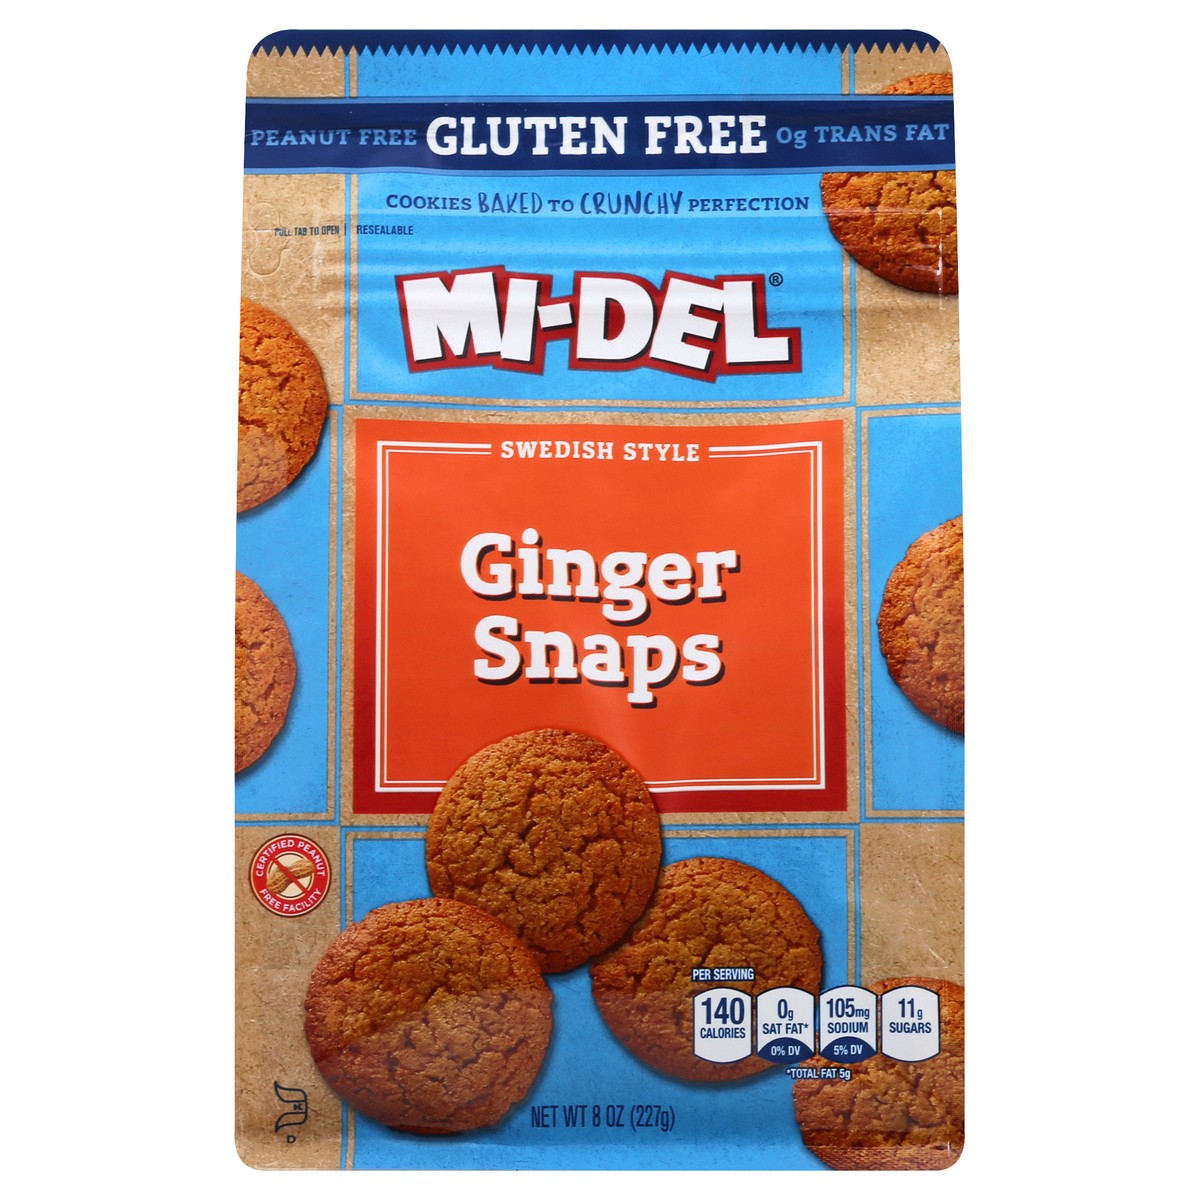 slide 9 of 12, MI-Del Midel Gluten Free Ginger Snaps, 8 oz